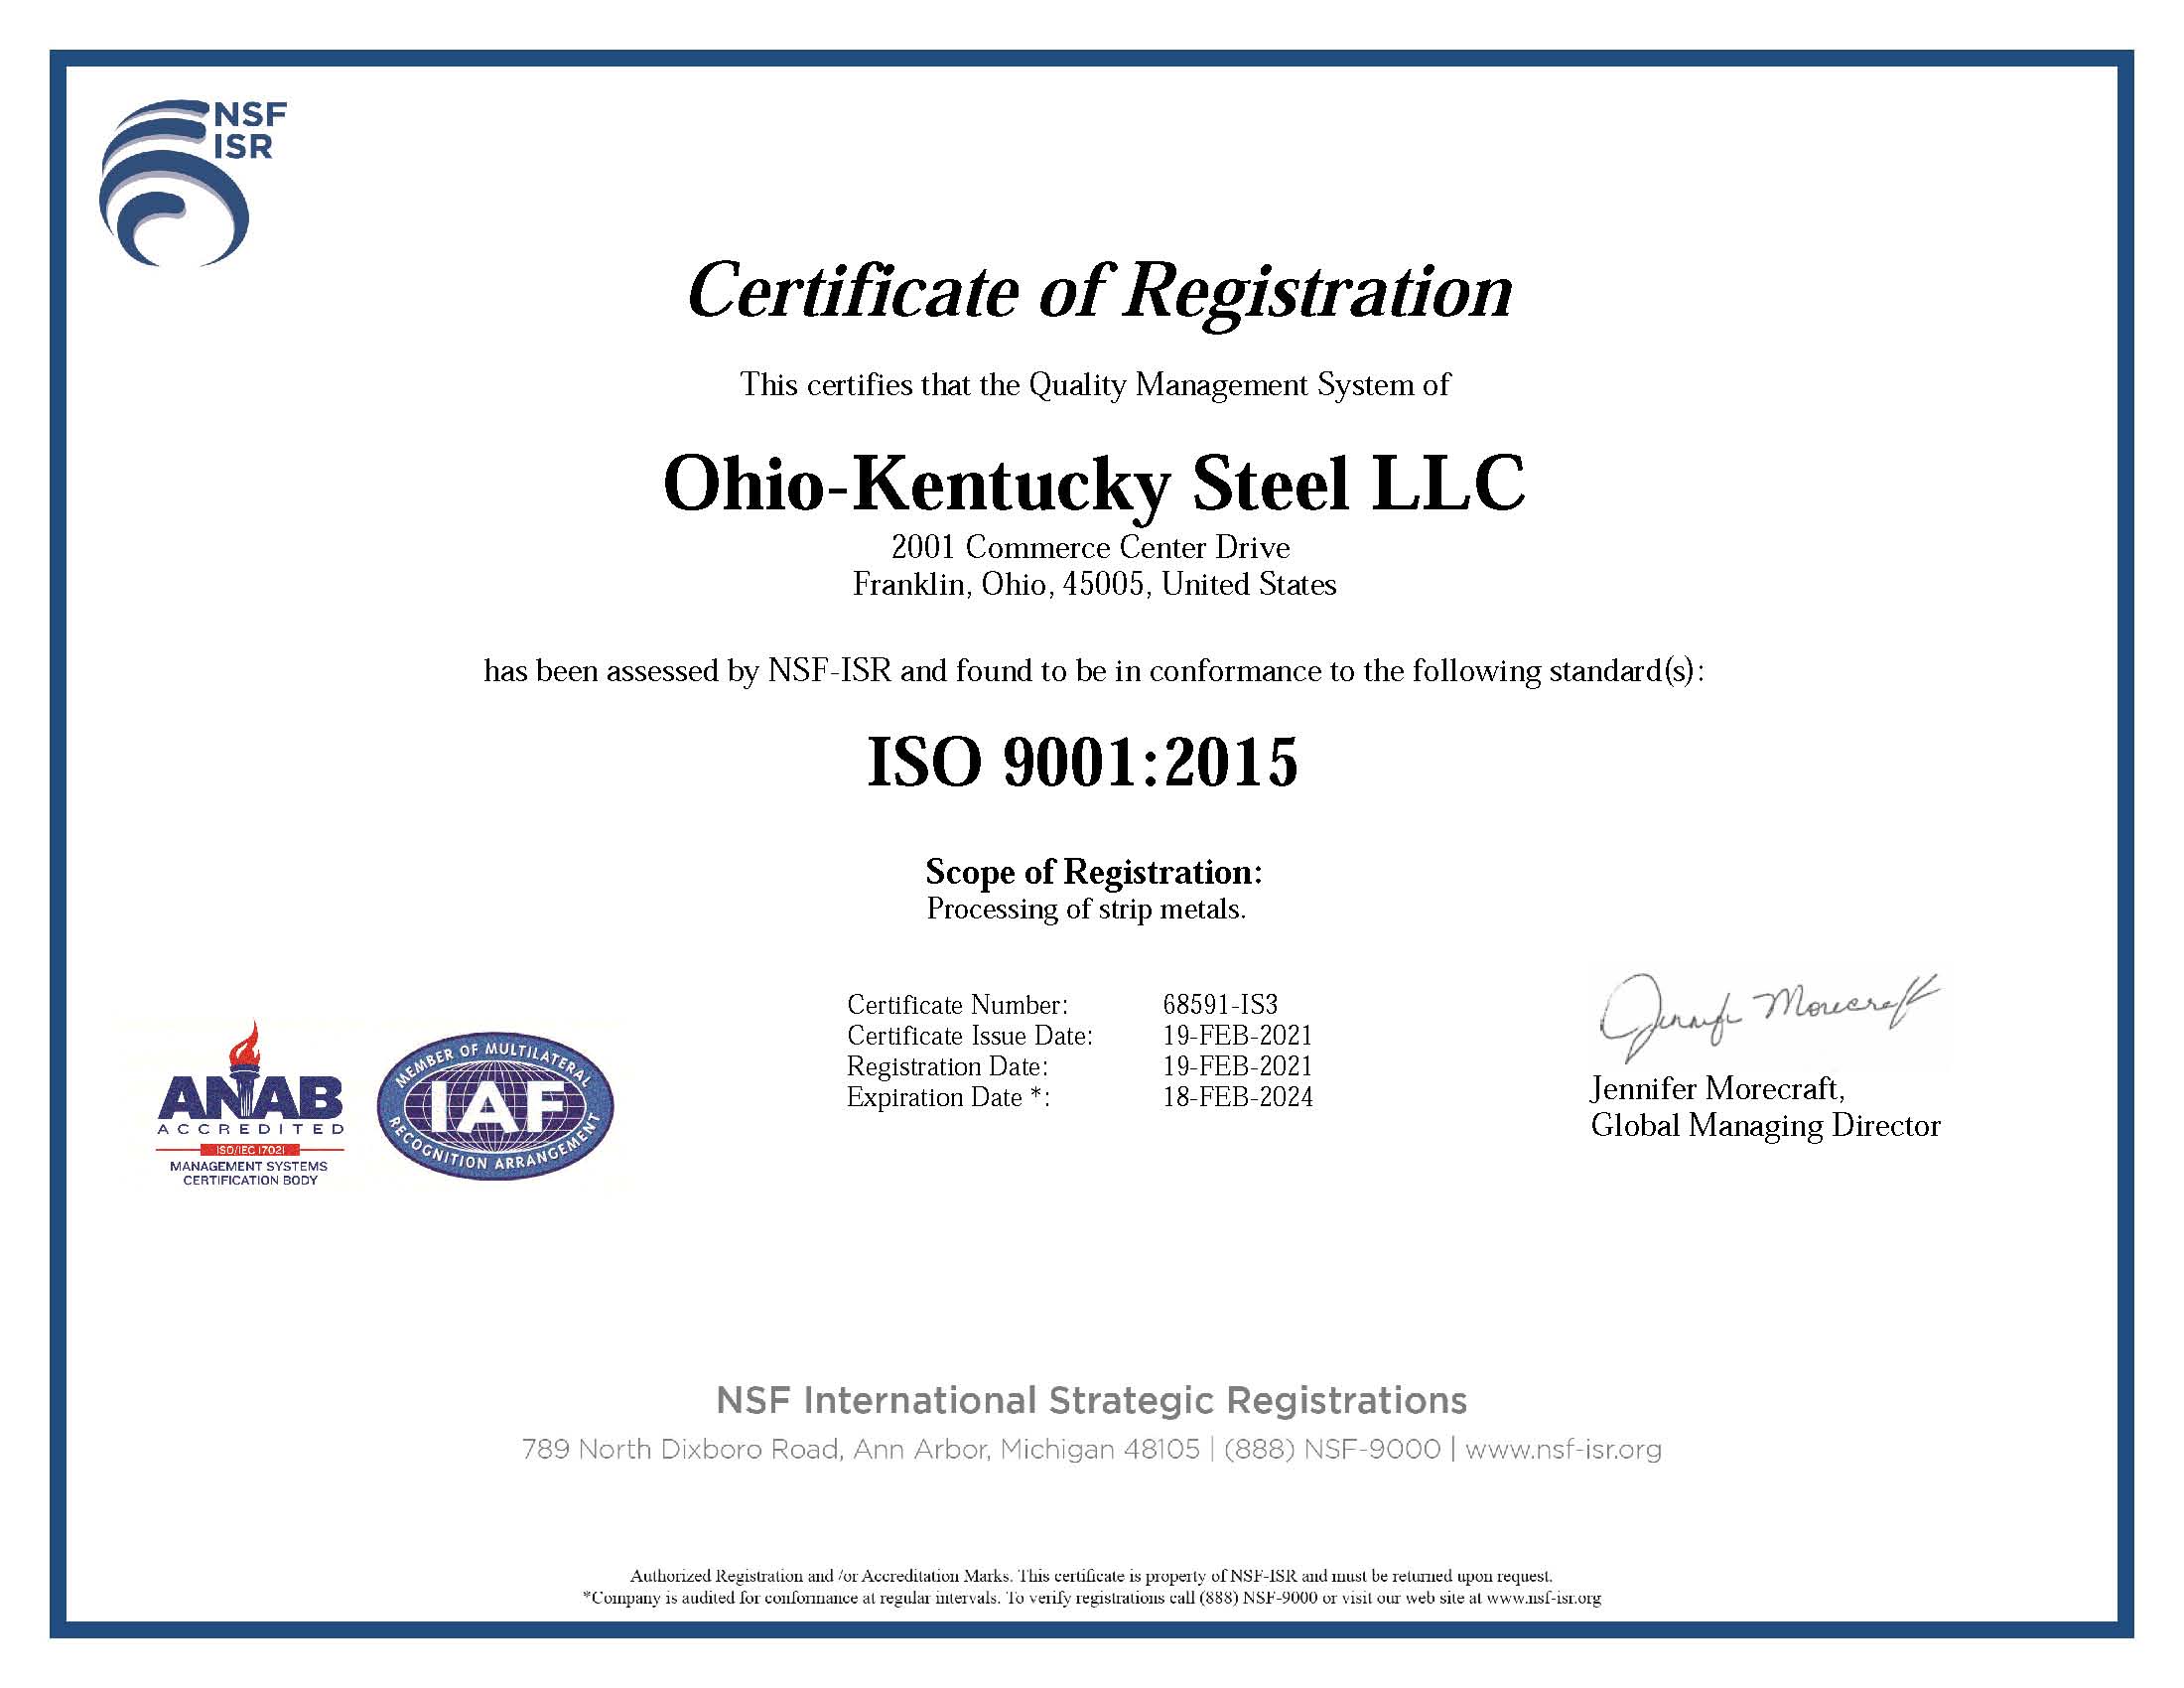 Certificate of Registration - Ohio-Kentucky Steel, LLC. ISO